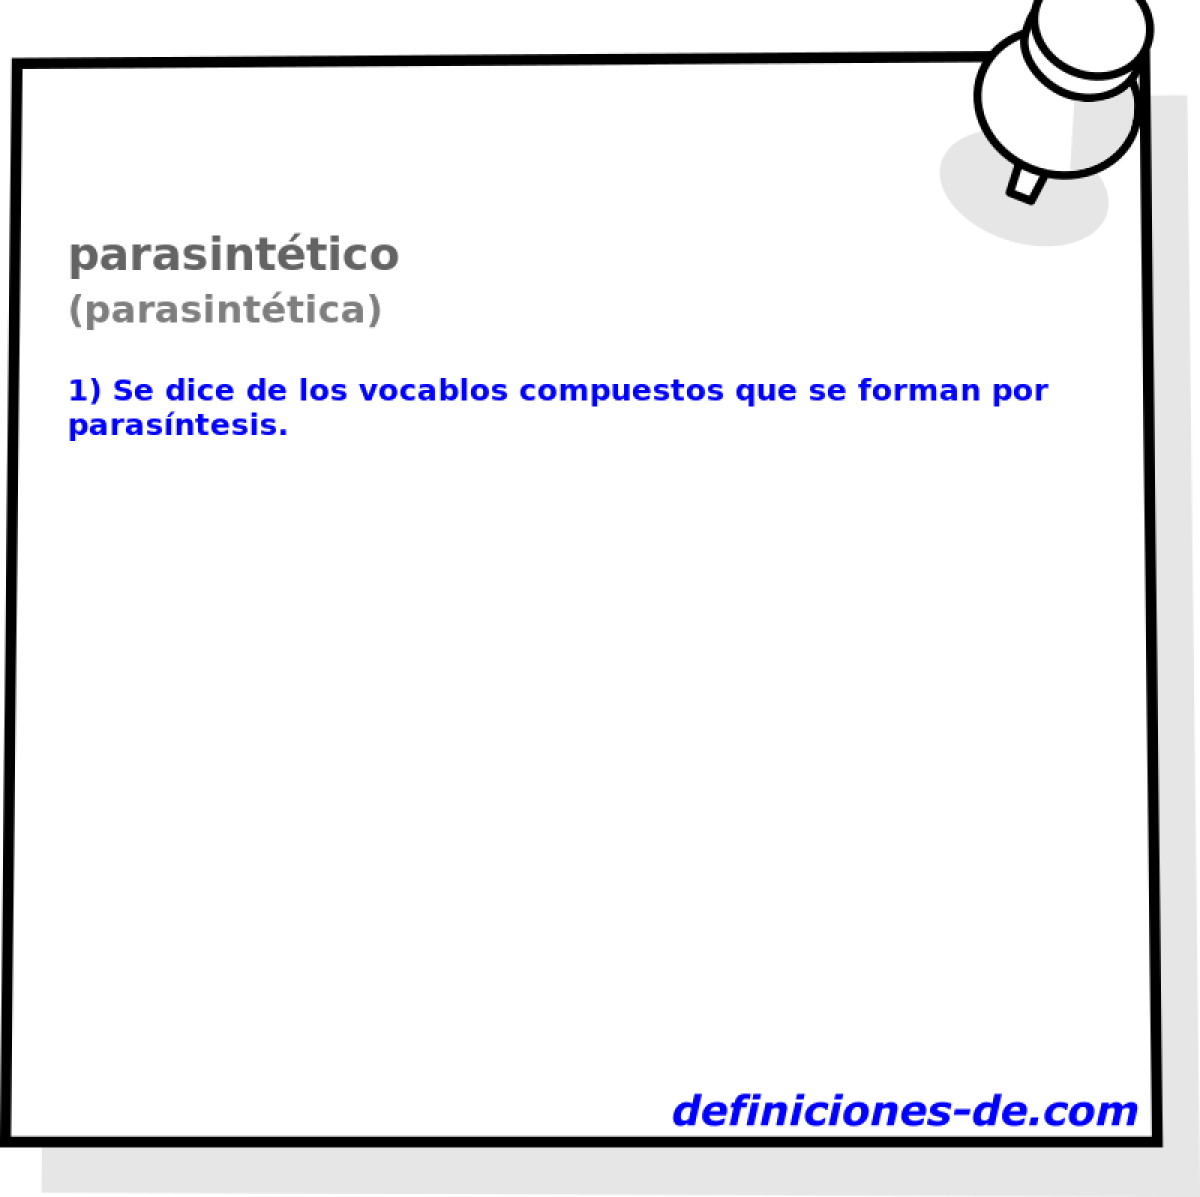 parasinttico (parasinttica)